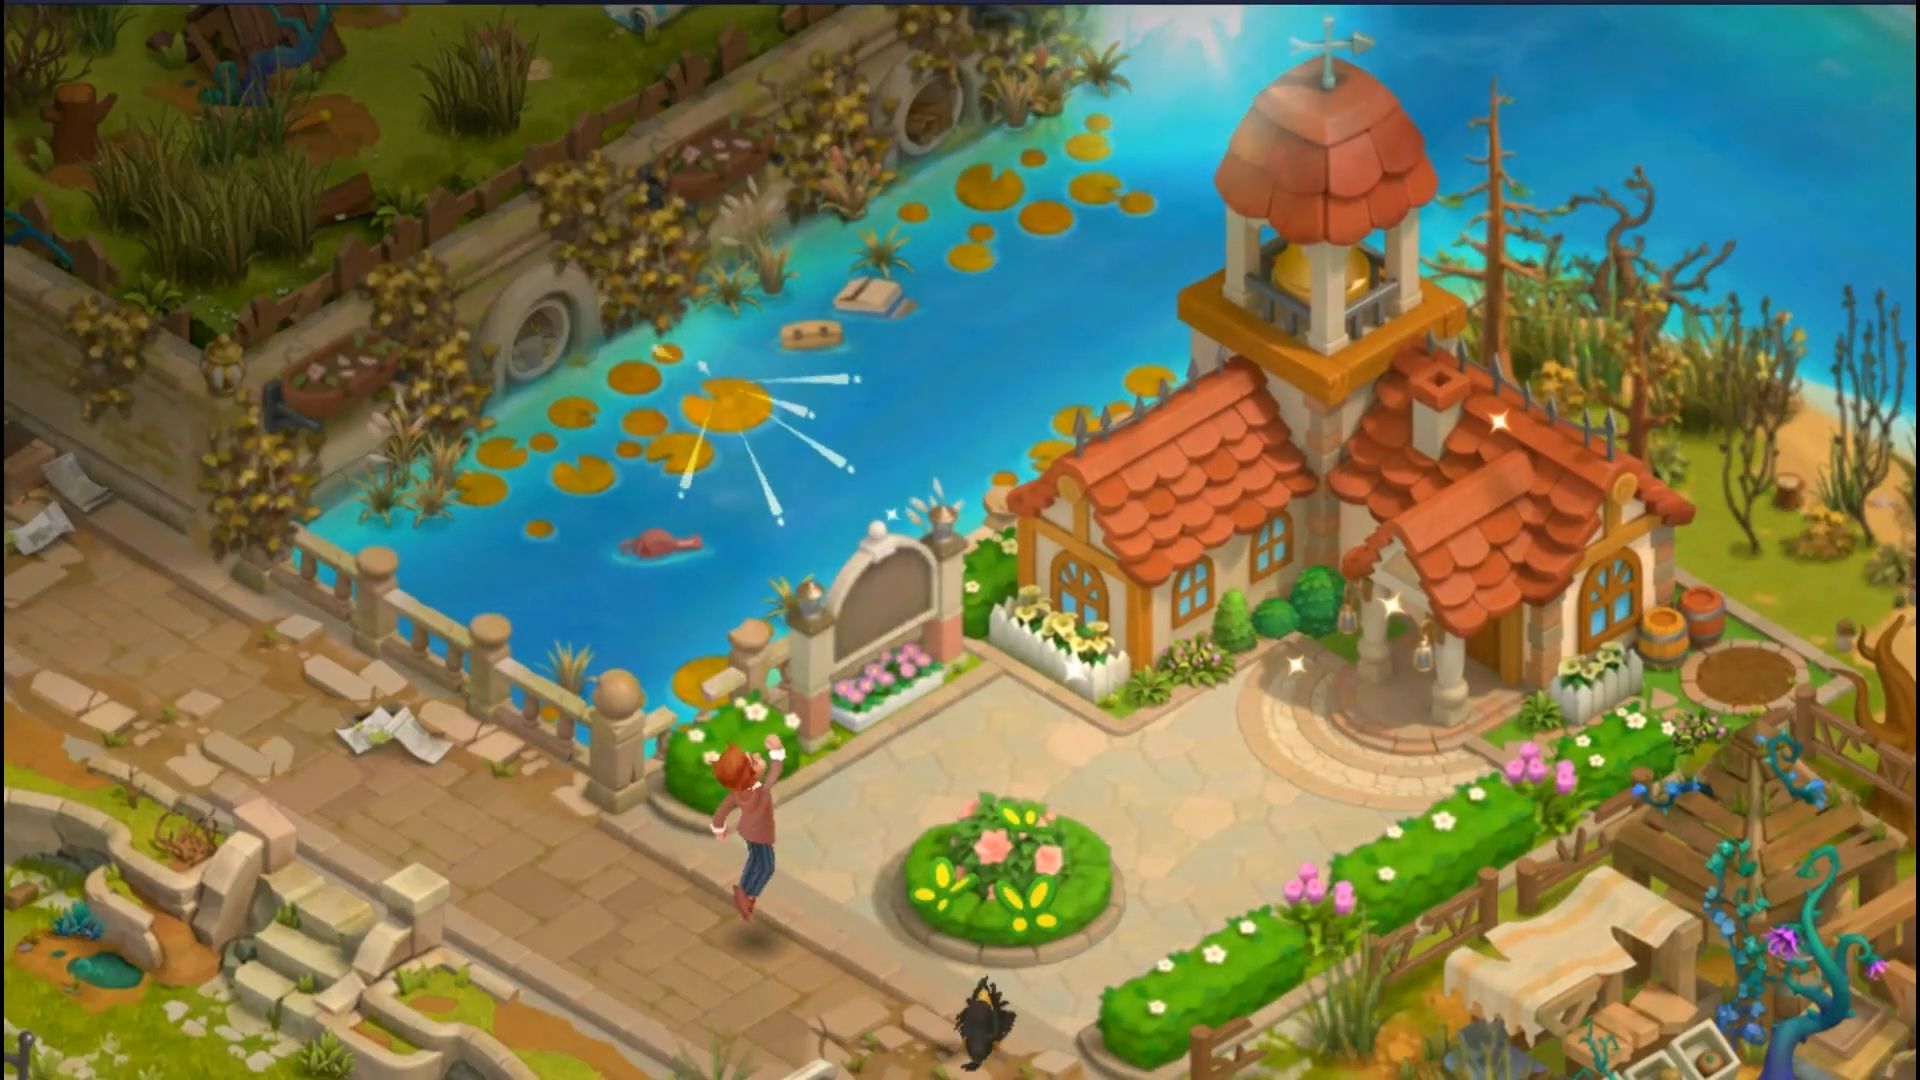 Townest: Alfred's Adventure screenshot 1